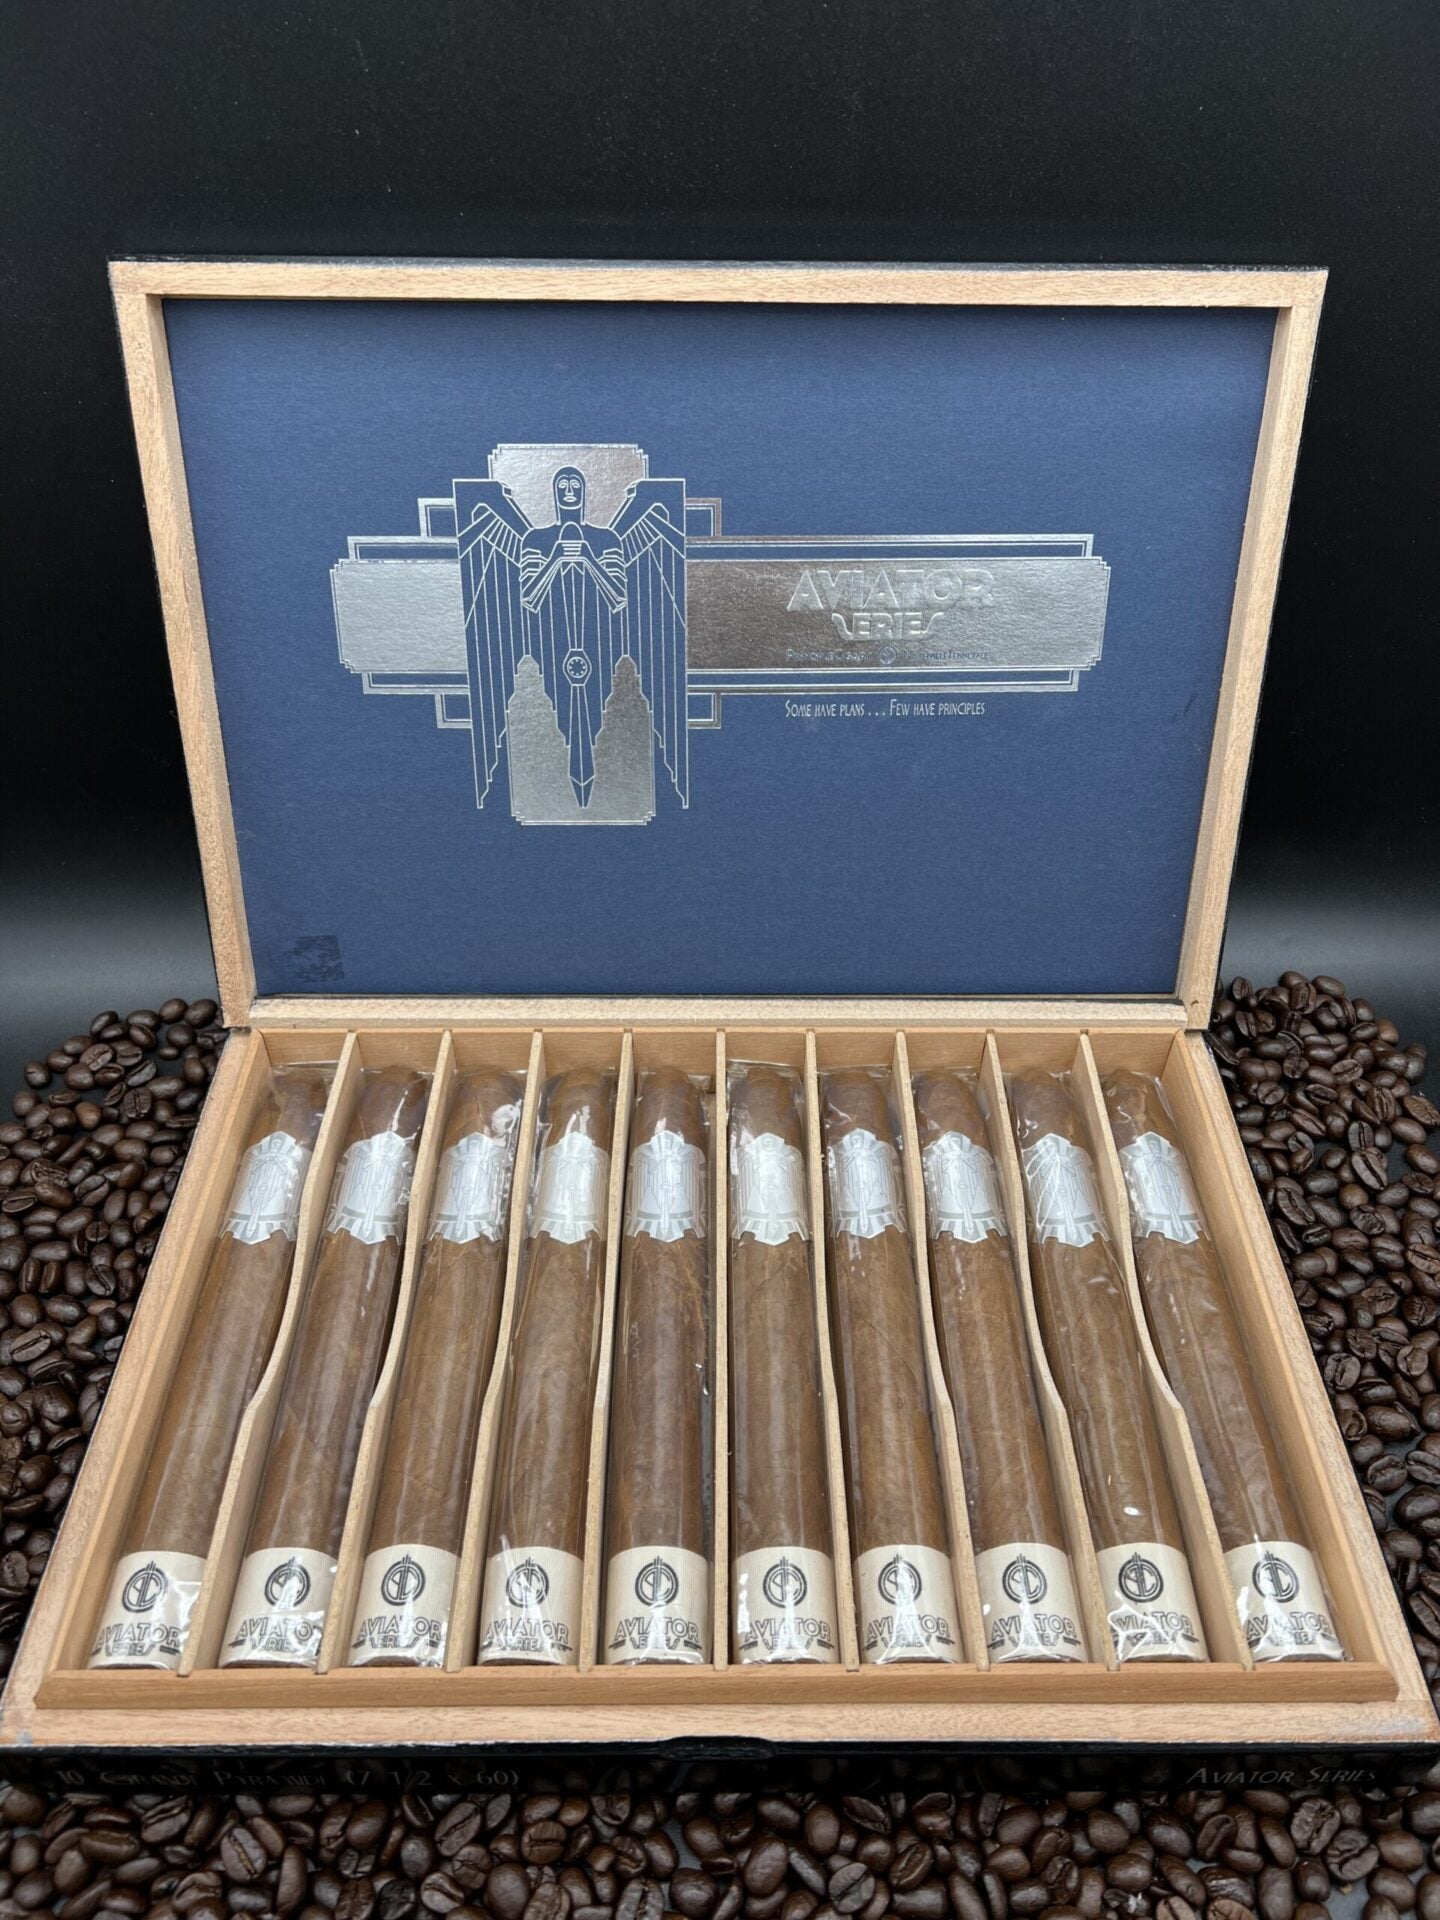 Principle Cigars - Aviator Series Grande Pyramide cigars supplied by Sir Louis Cigars